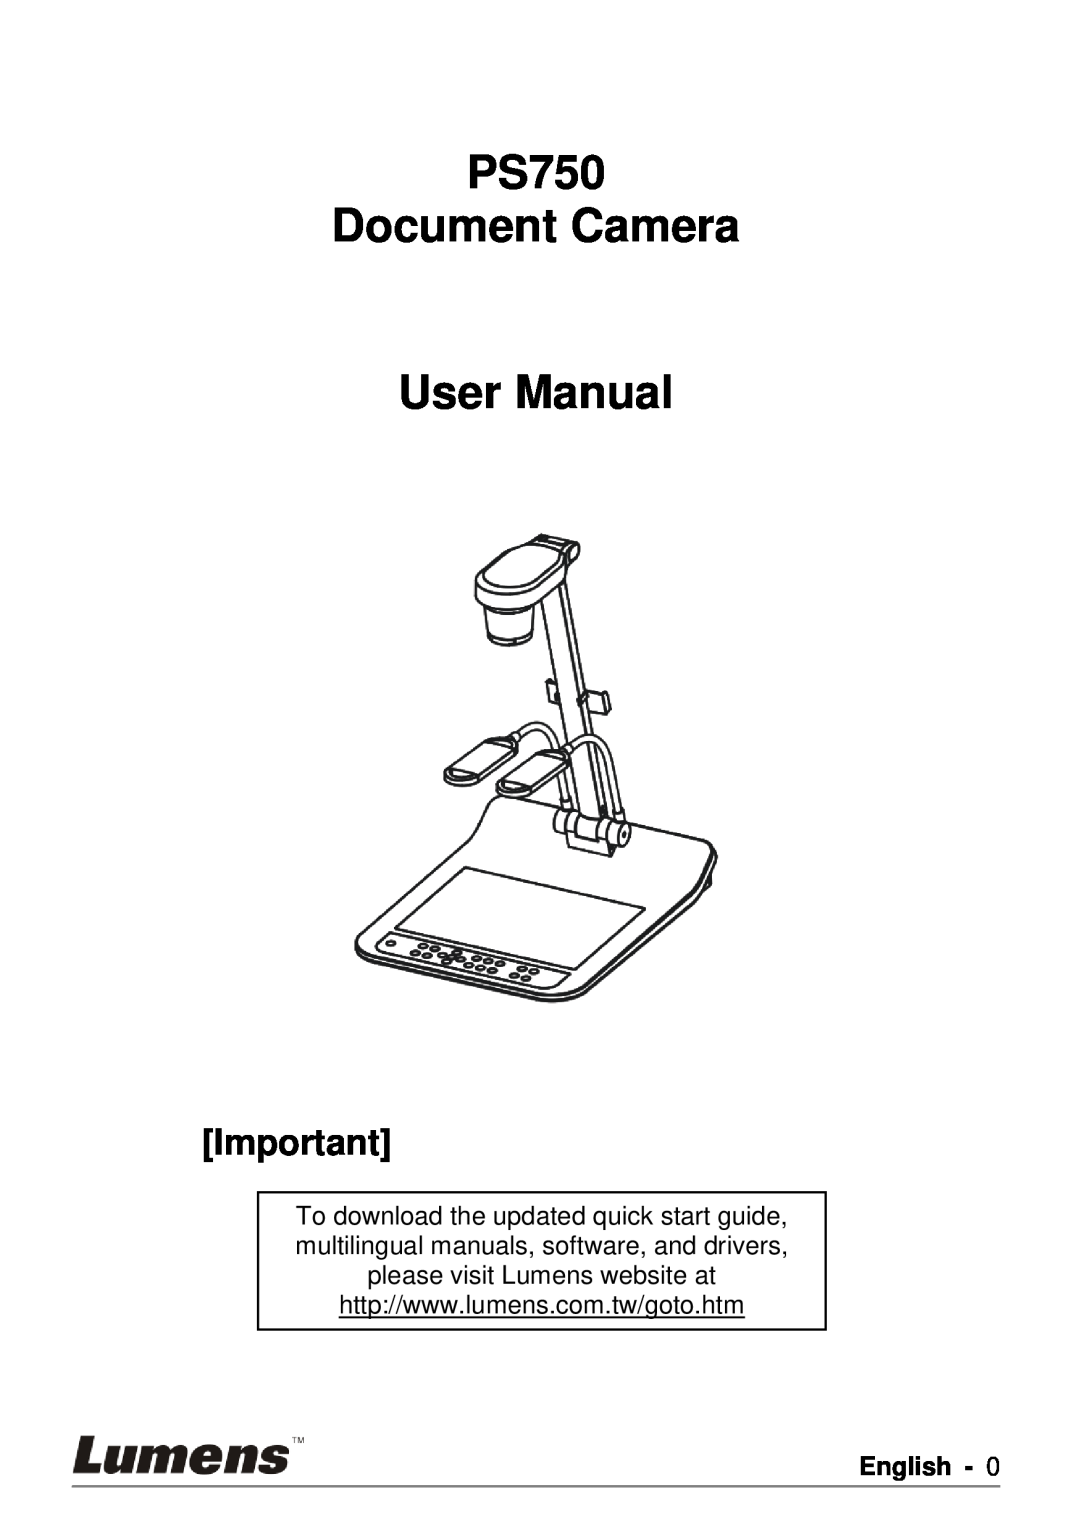 Lumens Technology user manual PS750 Document Camera User Manual, English 